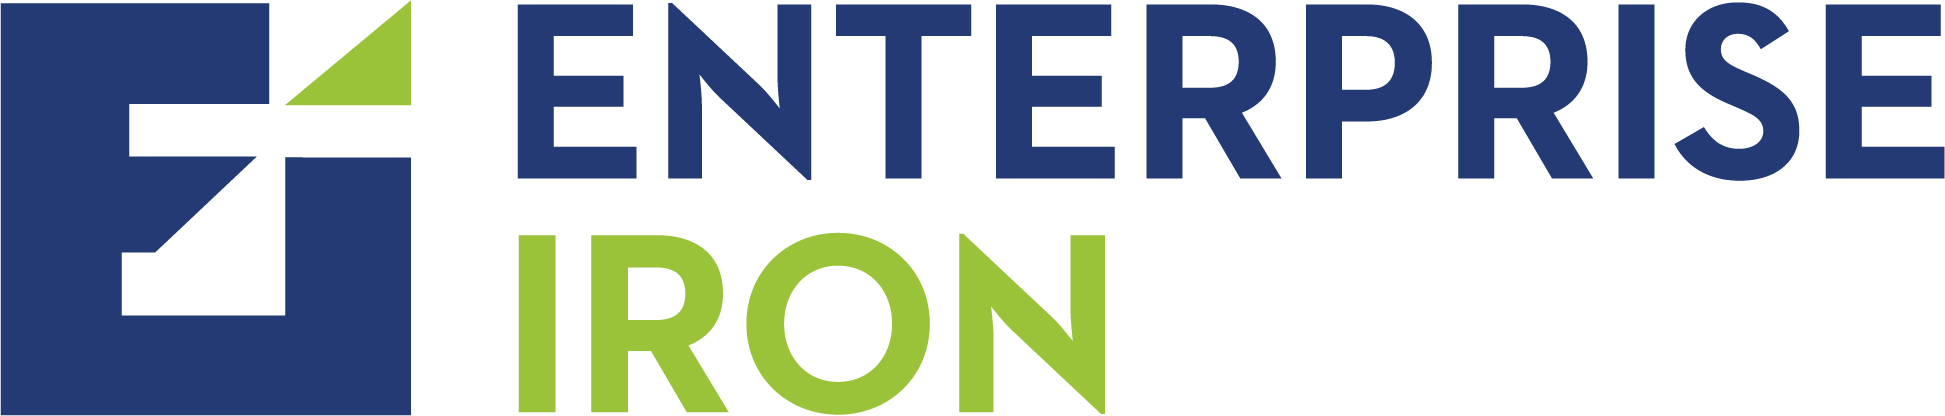 Enterprise Iron's logo